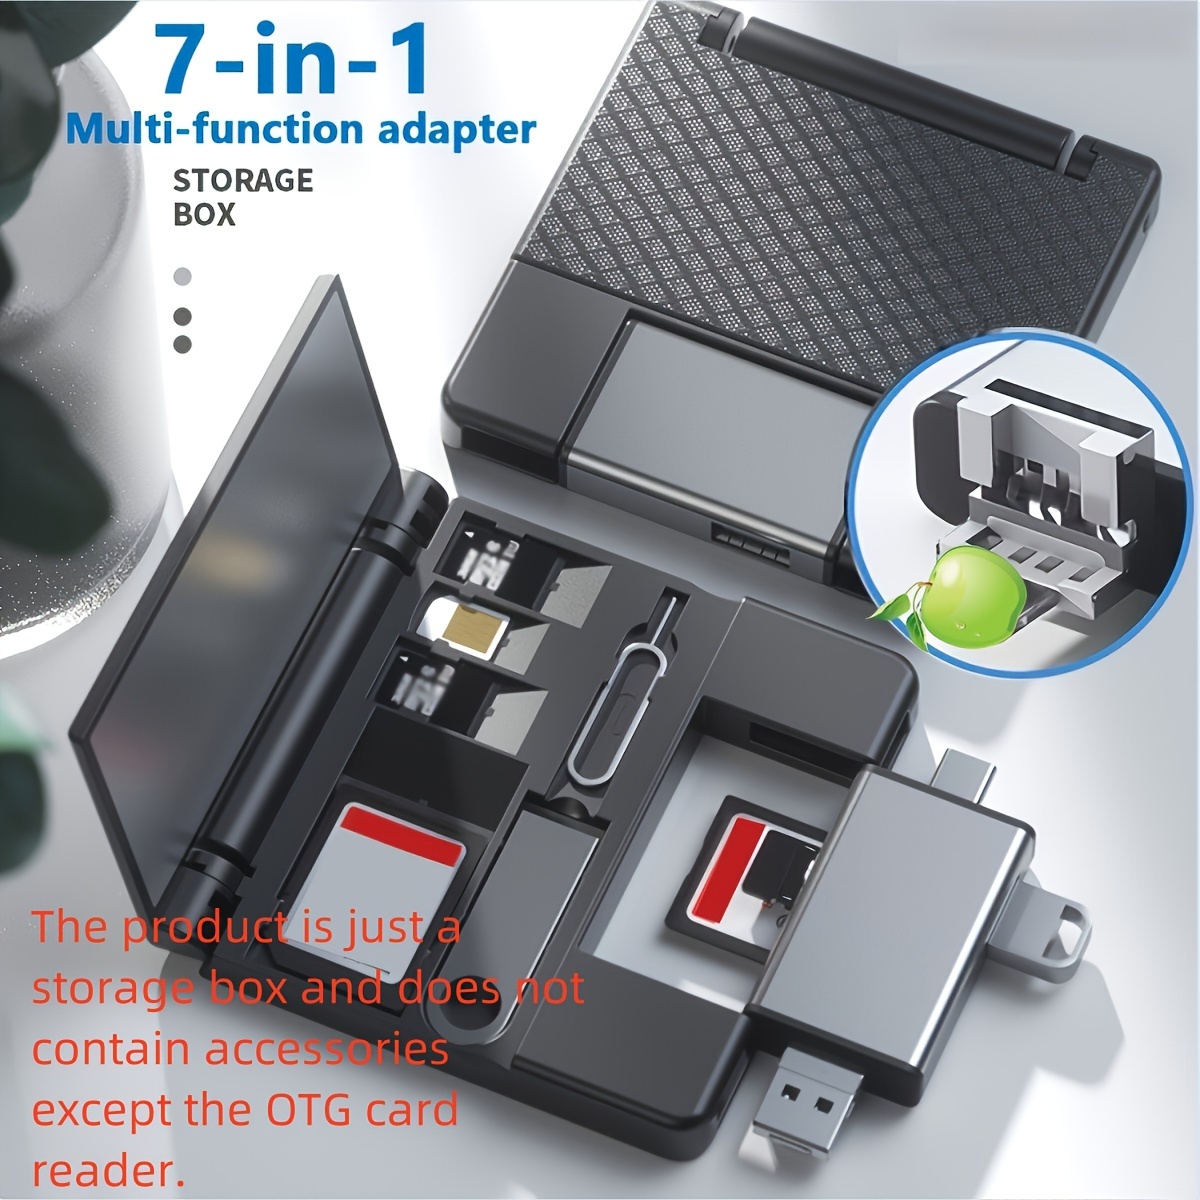 

Multifunctional Otg Card Reader 7-in-1 Micr0 Sd Card Reader Card Reader Type C For Digital Cameras, Smartphones, Tablets Otg Converter External U Disk, Sd, Tf Universal With Storage Box